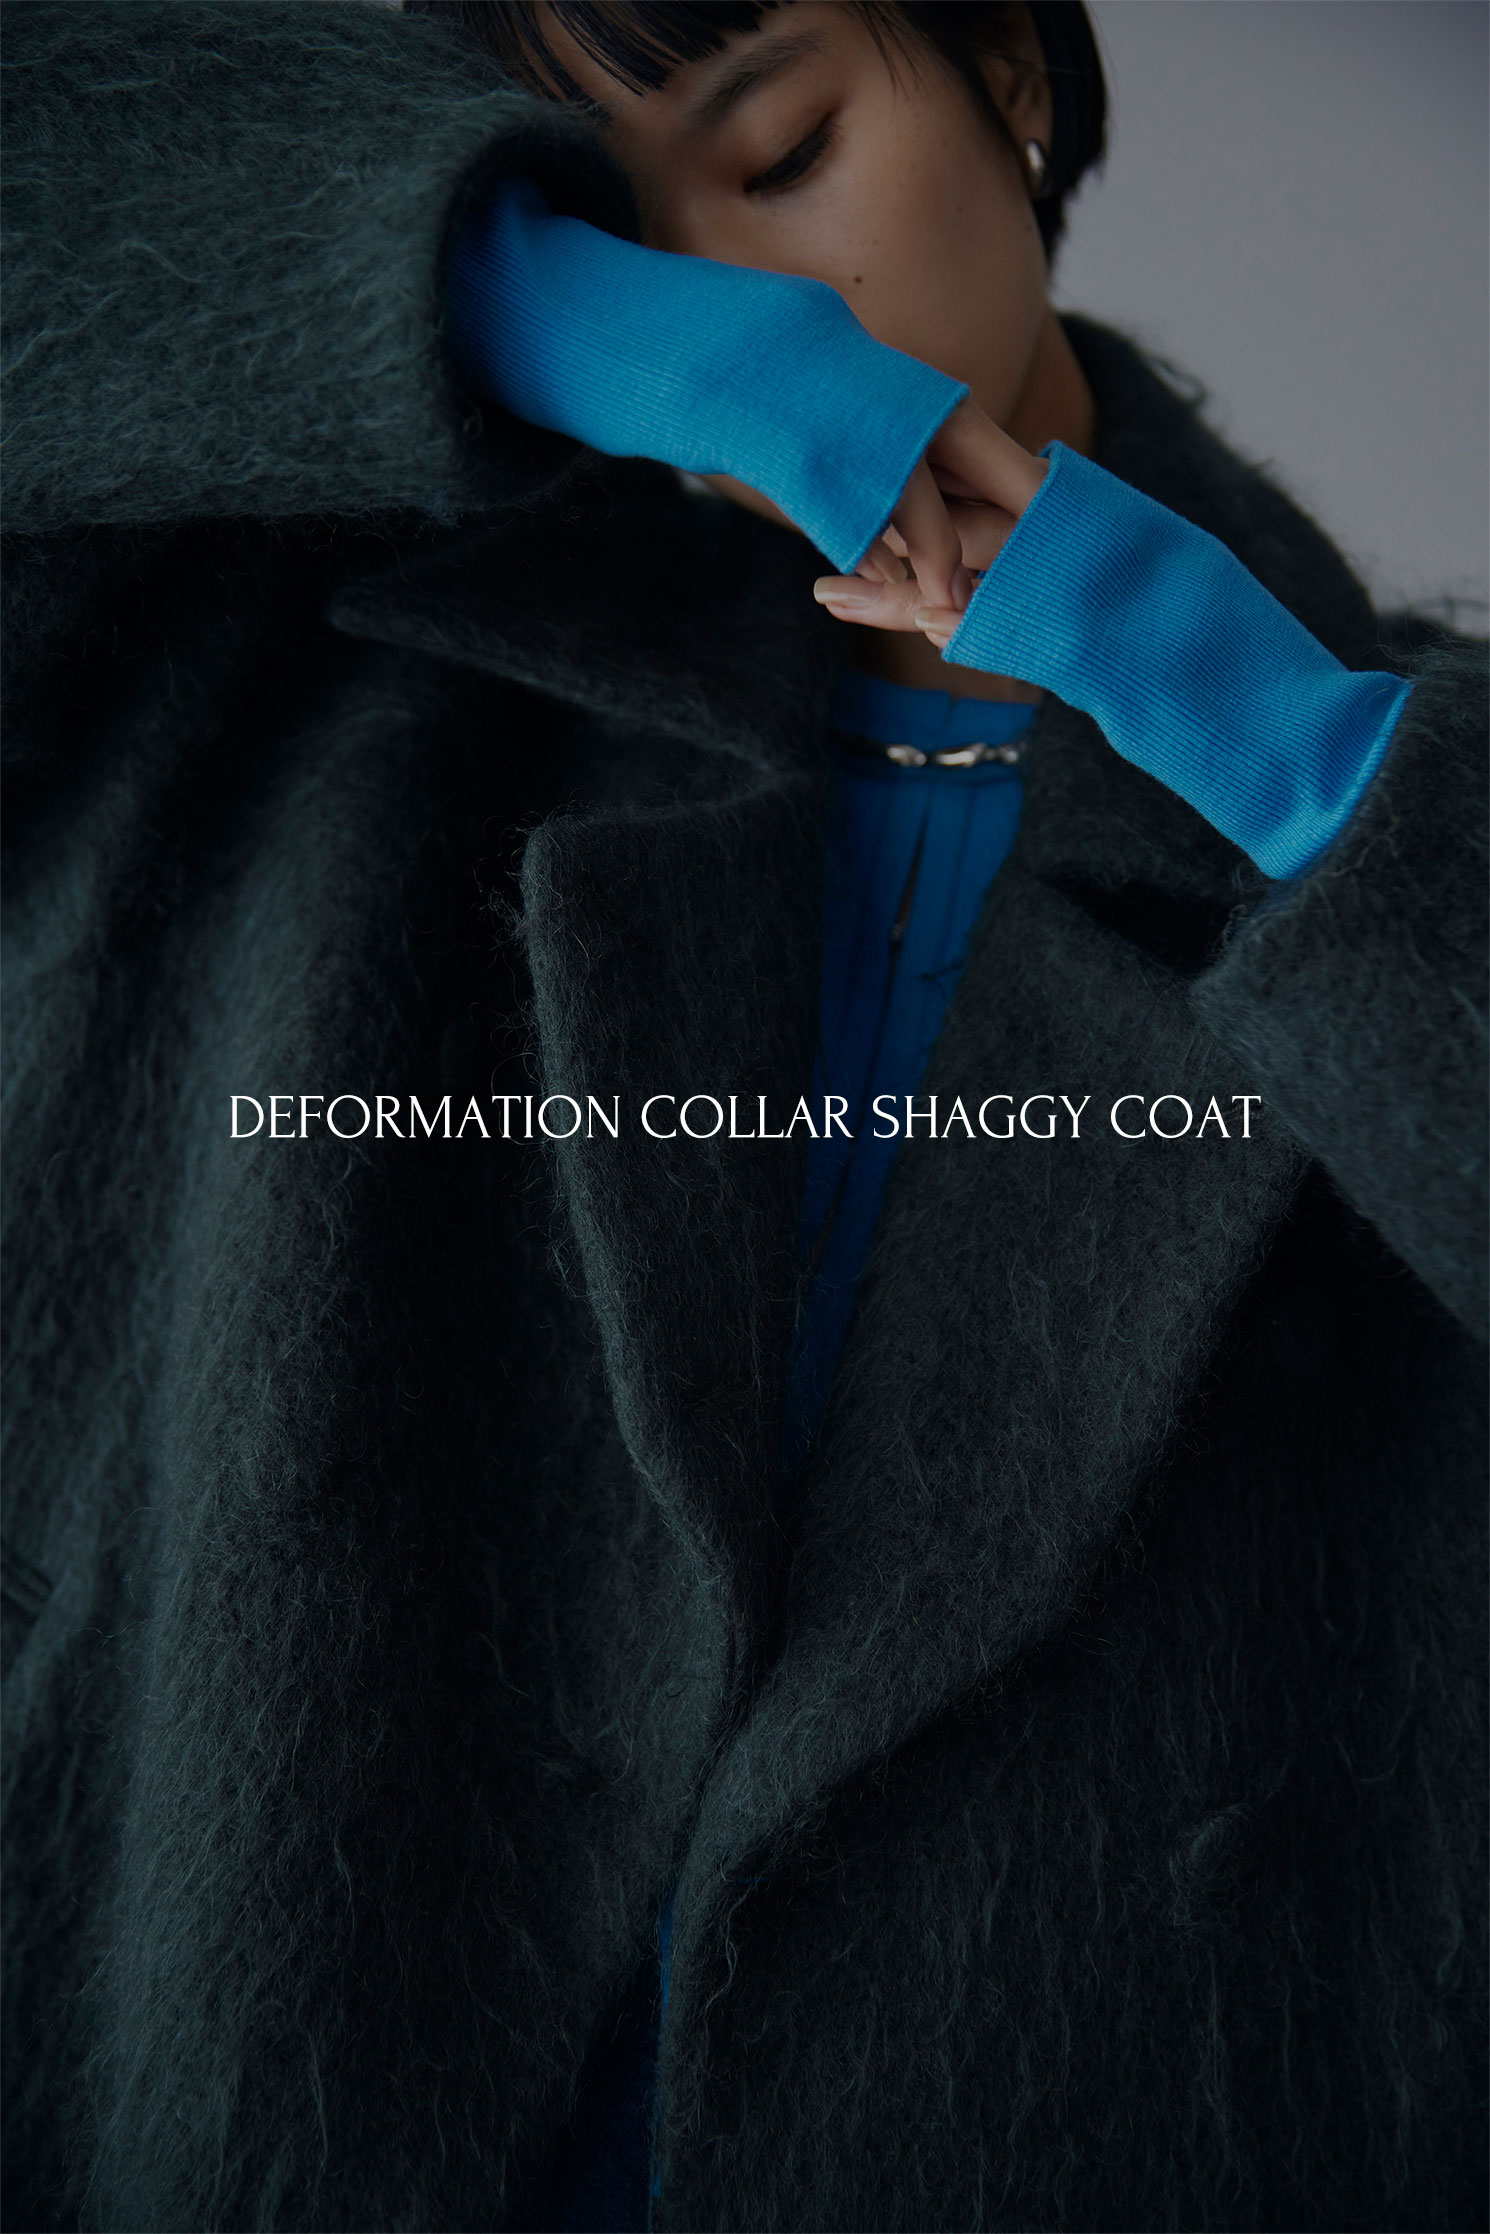 DEFORMATION COLLAR SHAGGY COAT